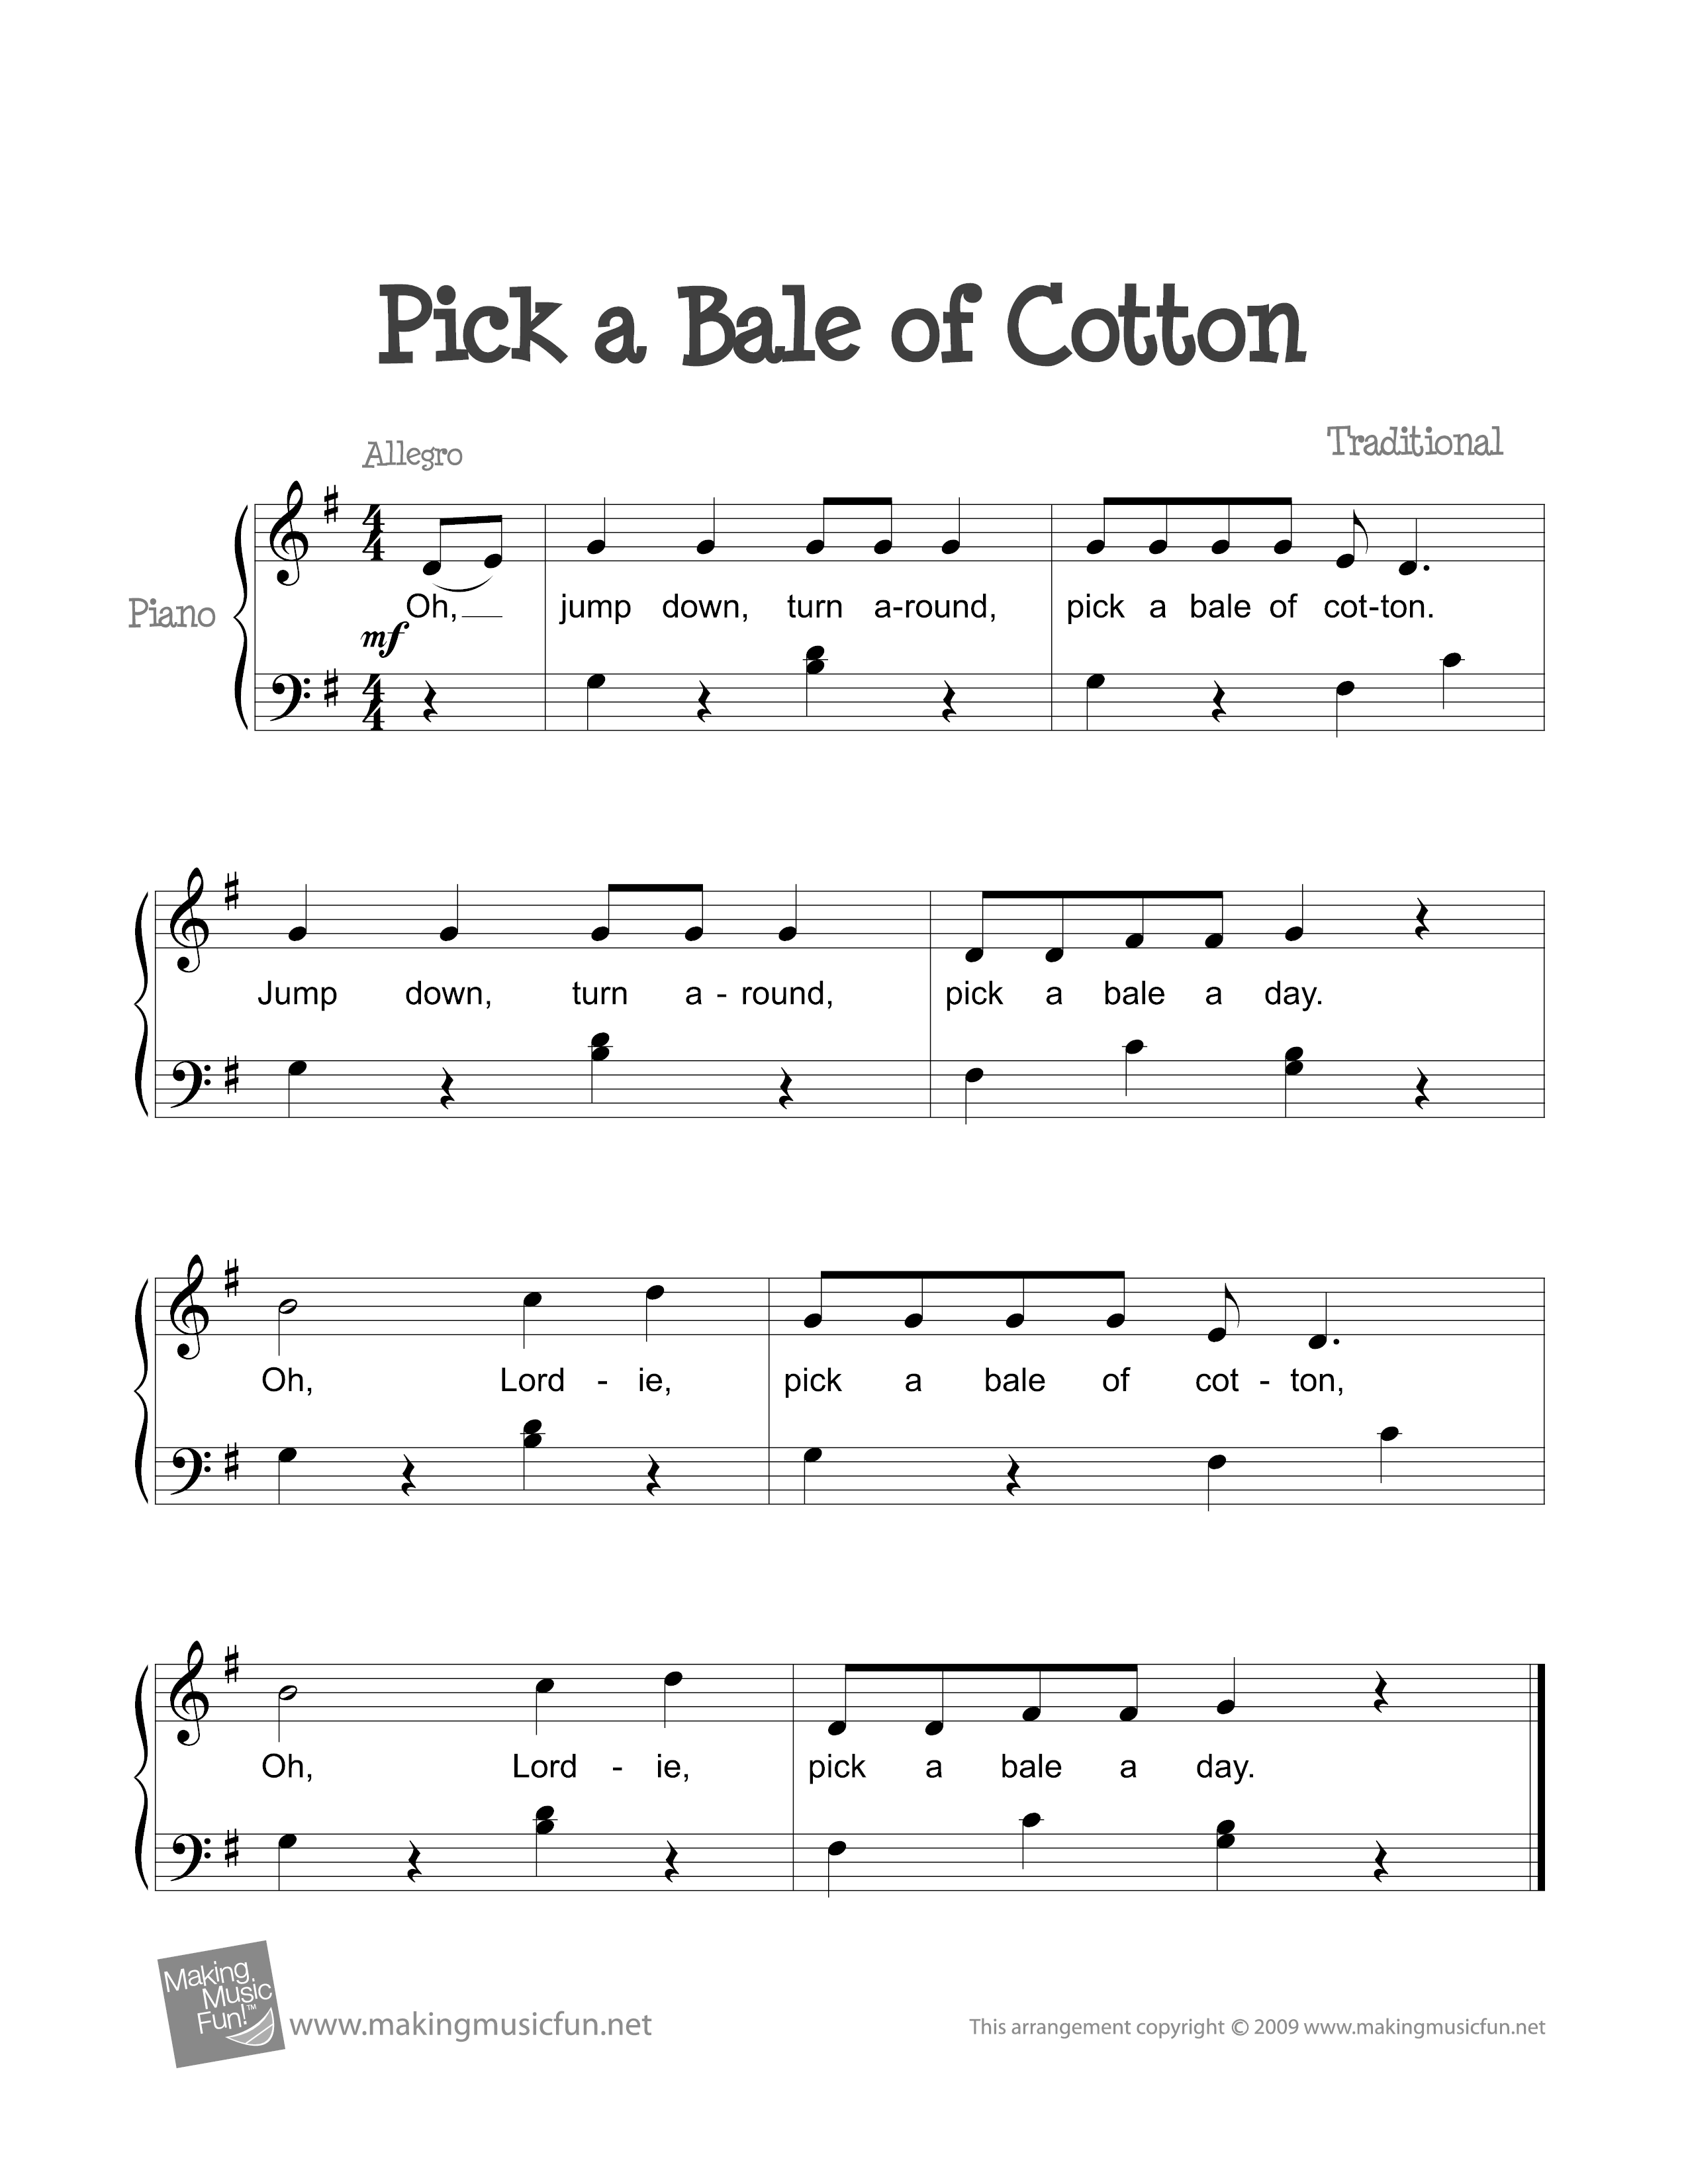 Pick a Bale of Cottonピアノ譜